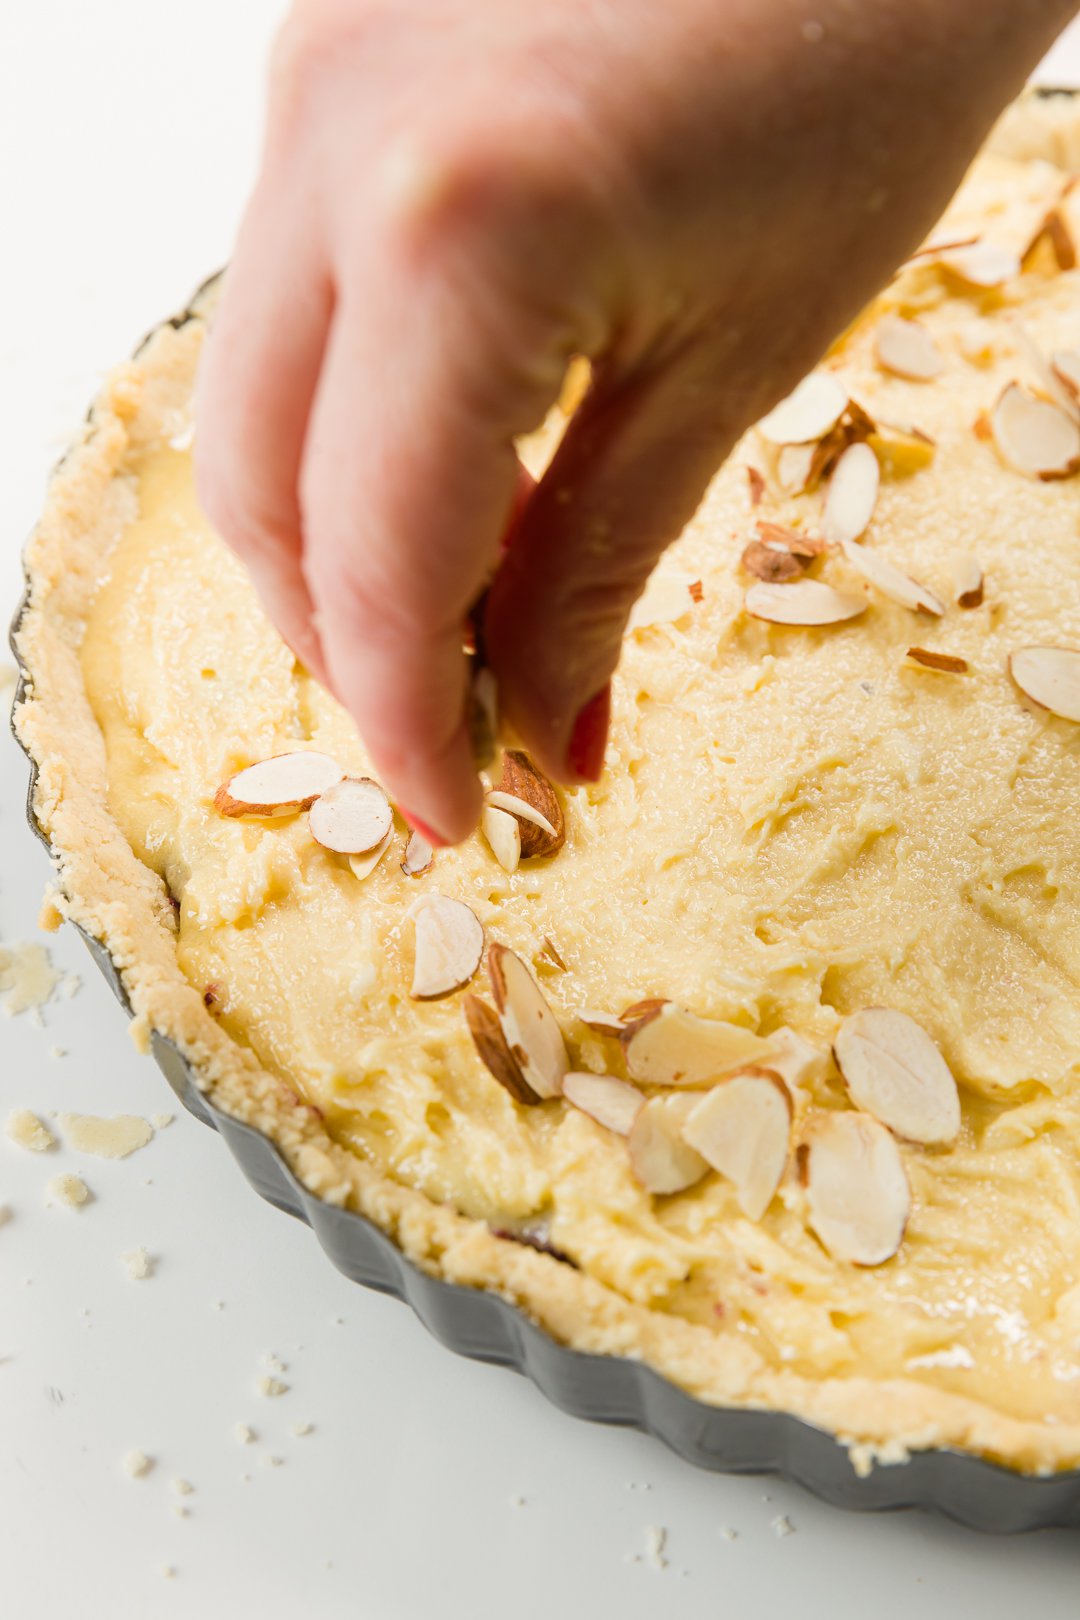 Sprinkling almond slivers on an unbaked tart